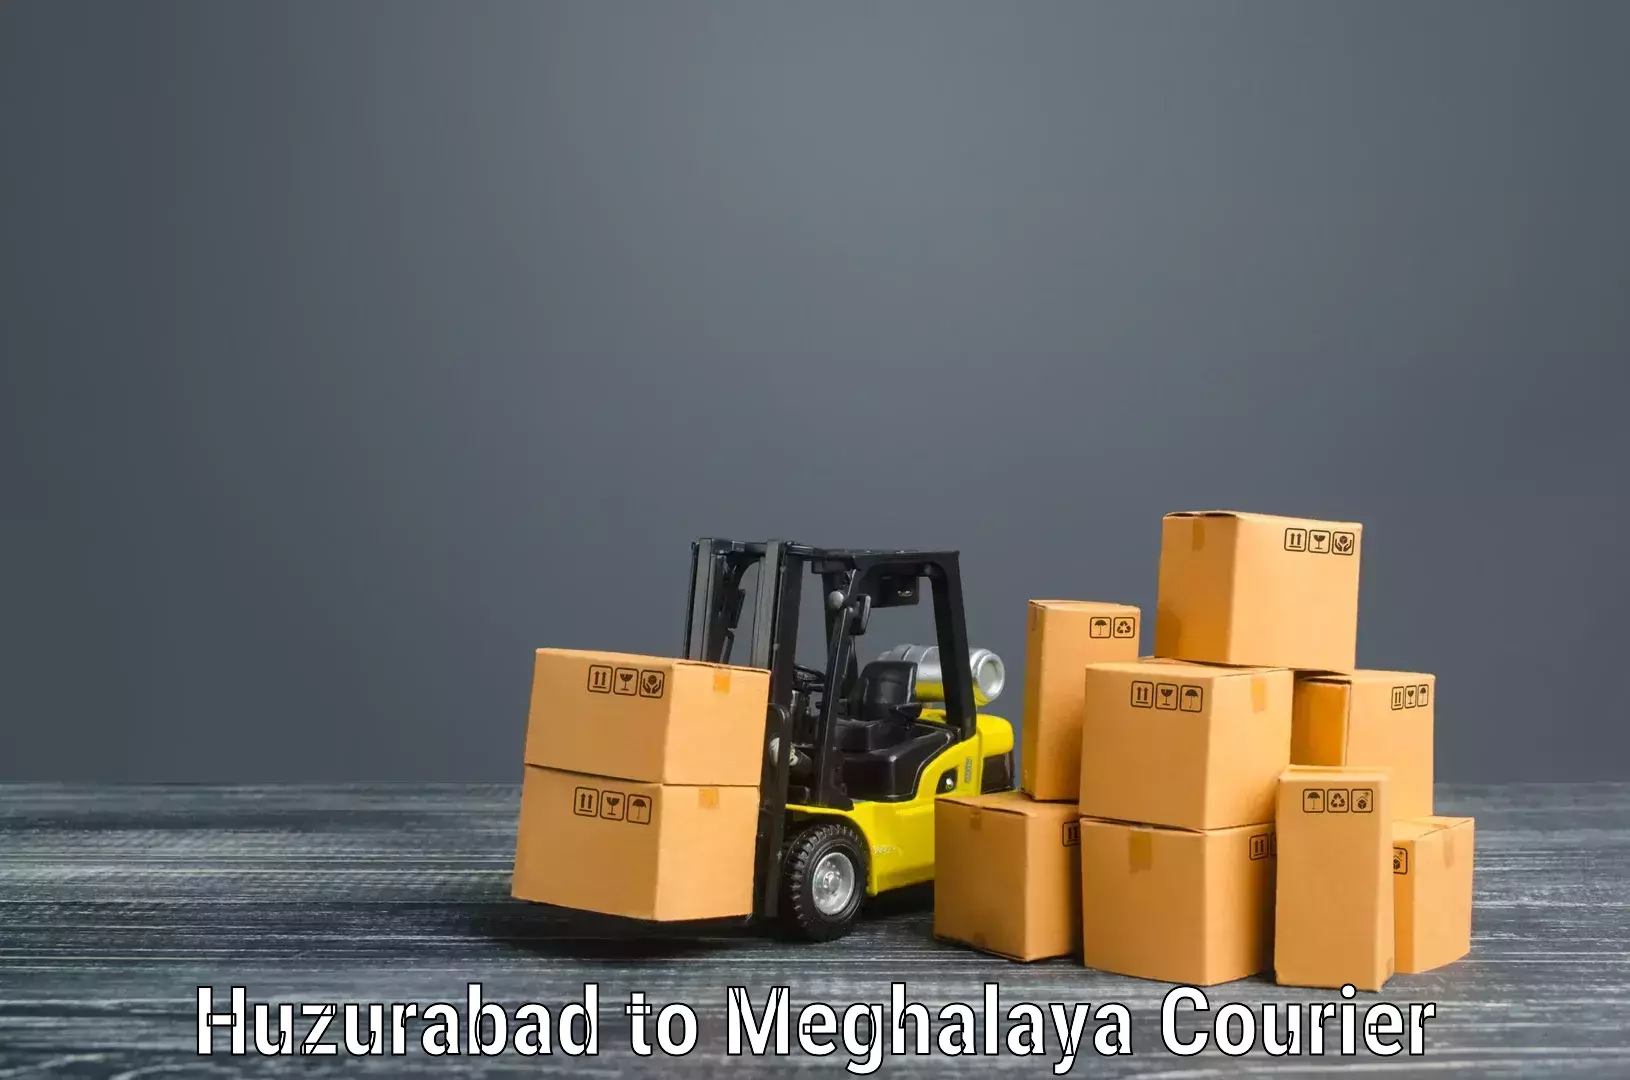 Professional moving company Huzurabad to Jowai